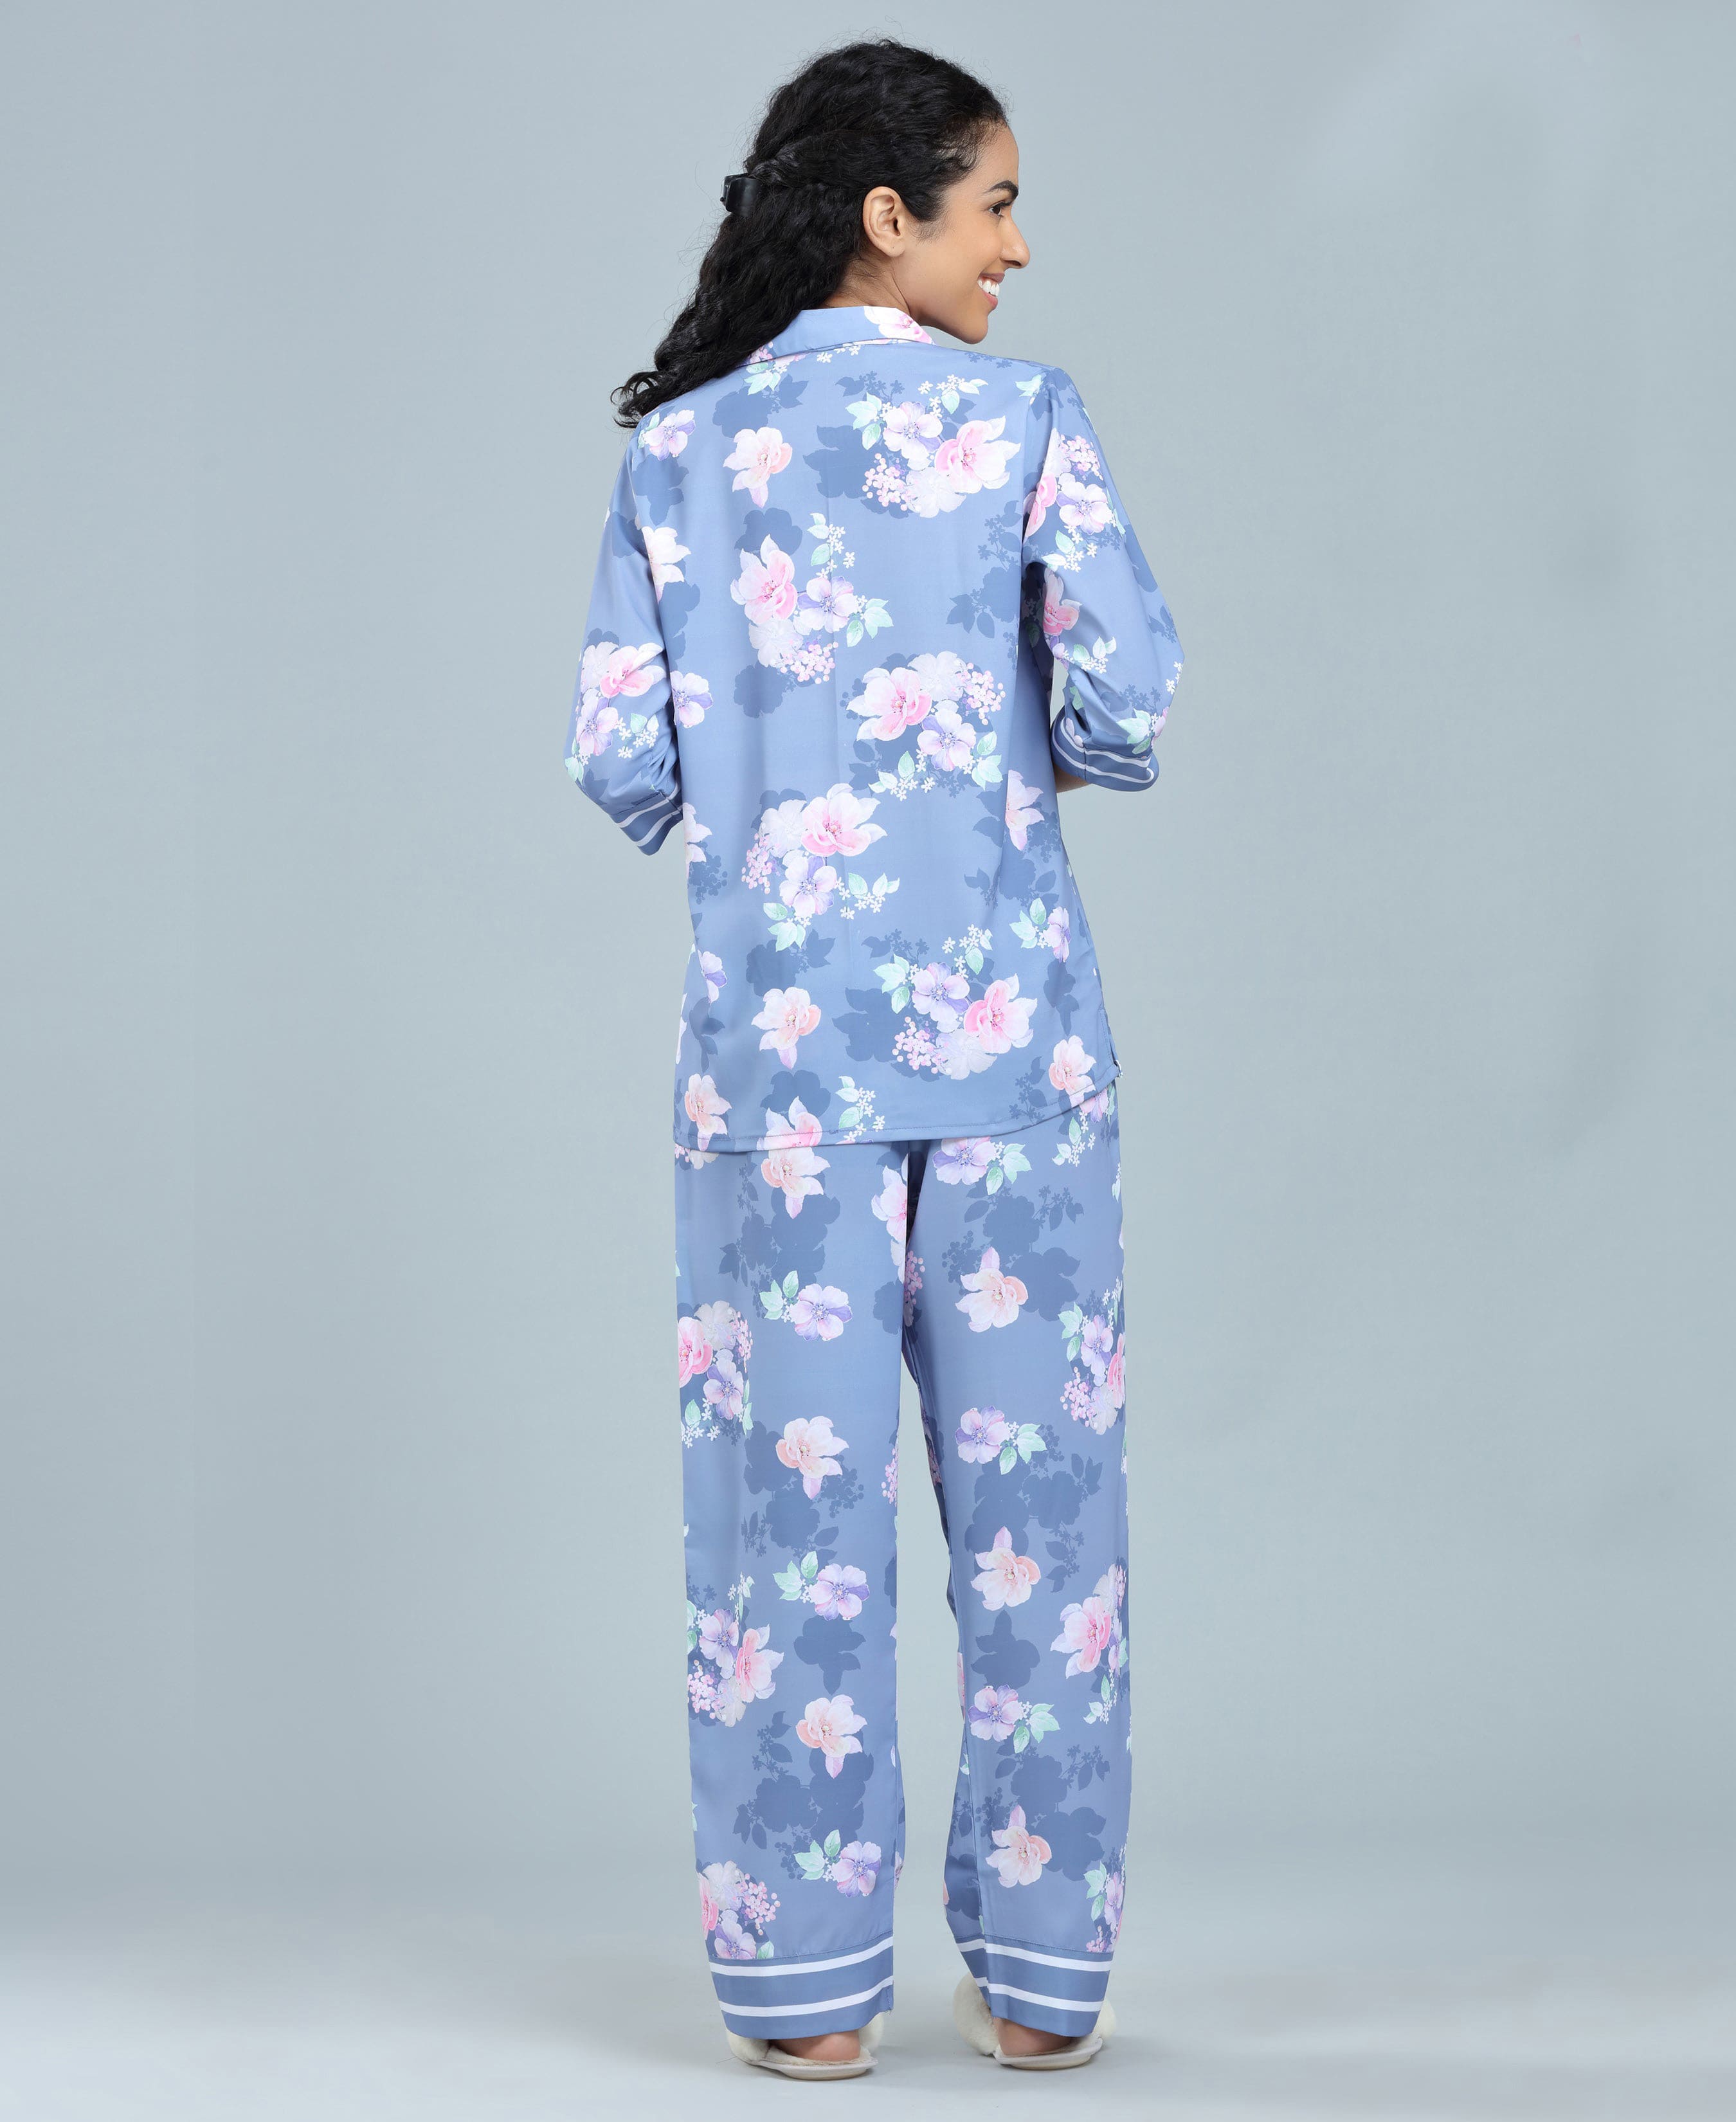 Flower Power Satin Night Suit